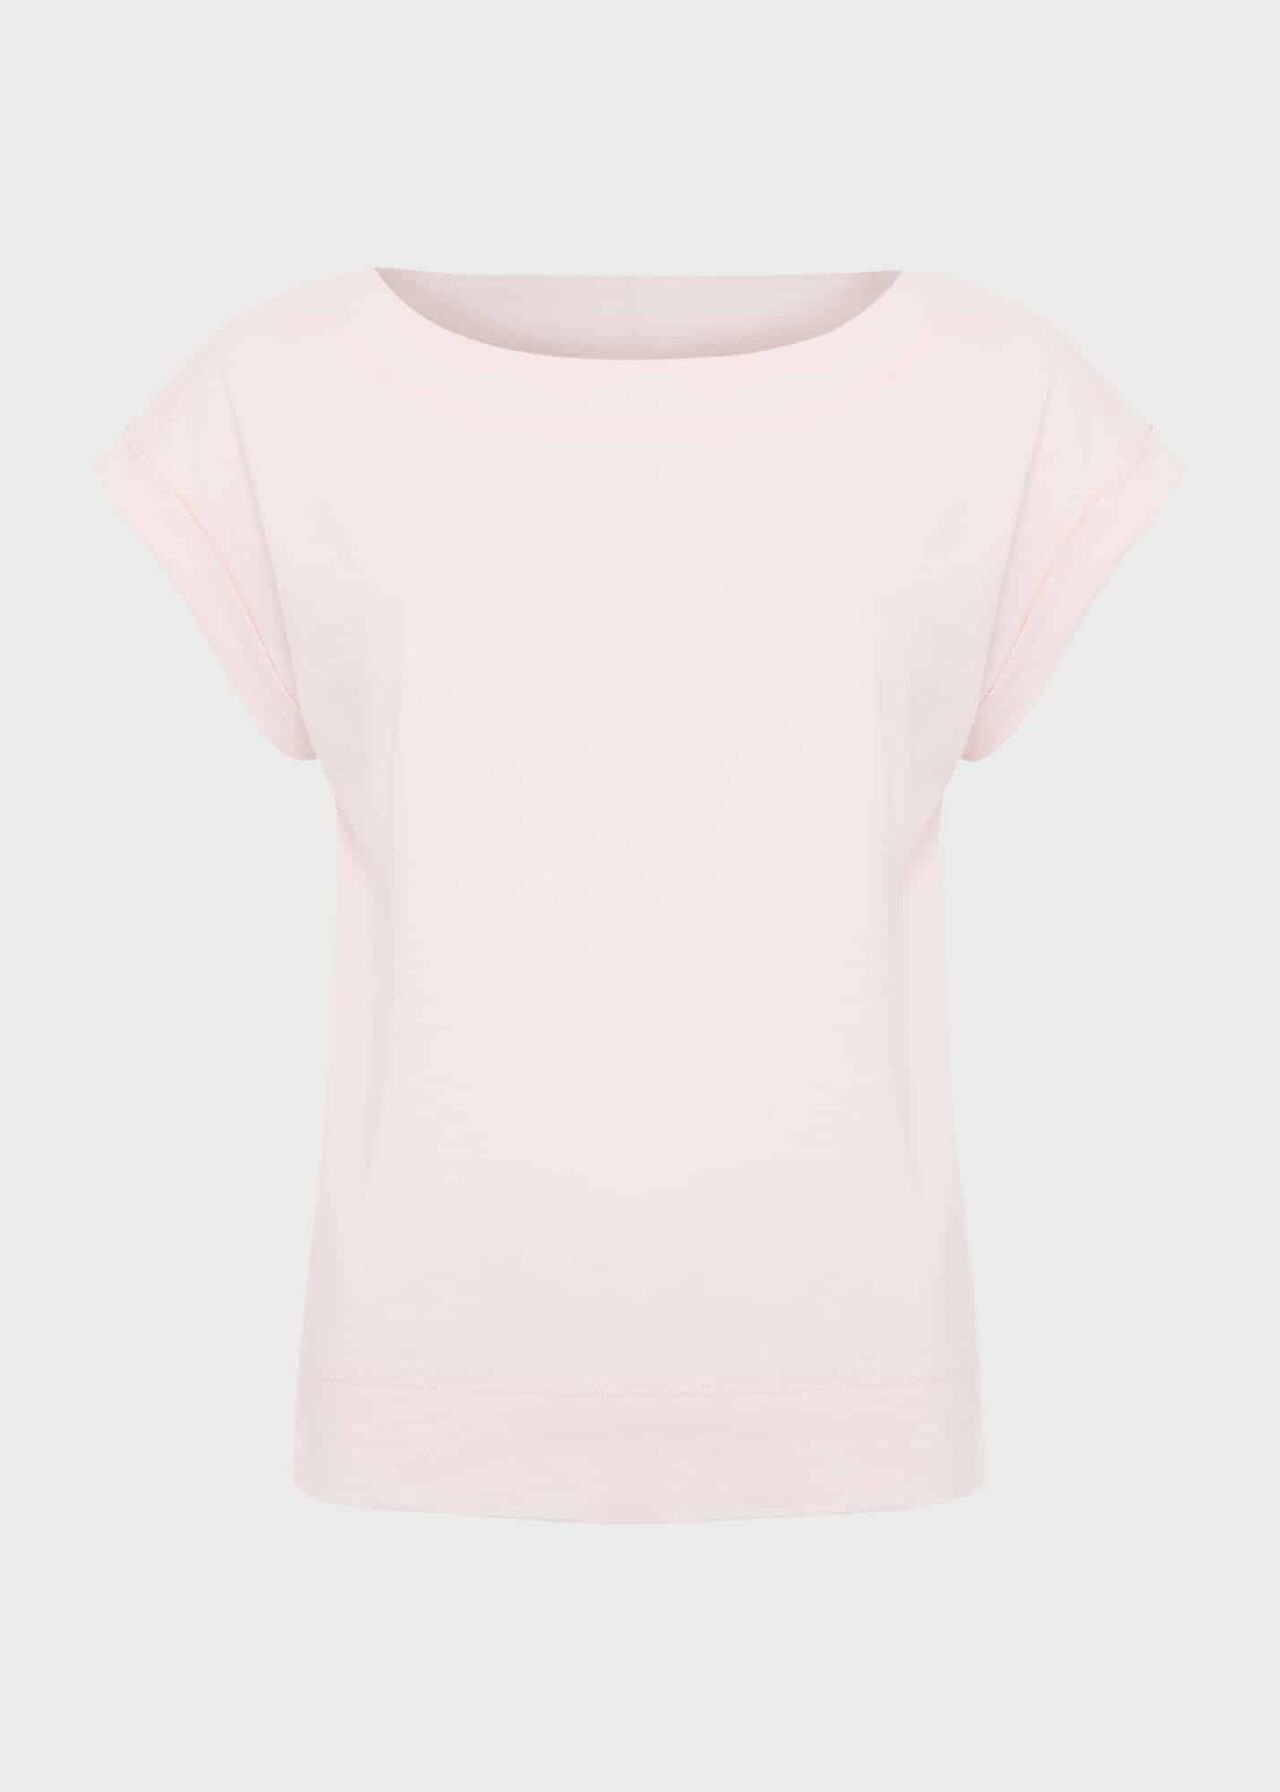 Alycia Cotton Slub T-Shirt, Pale Pink, hi-res